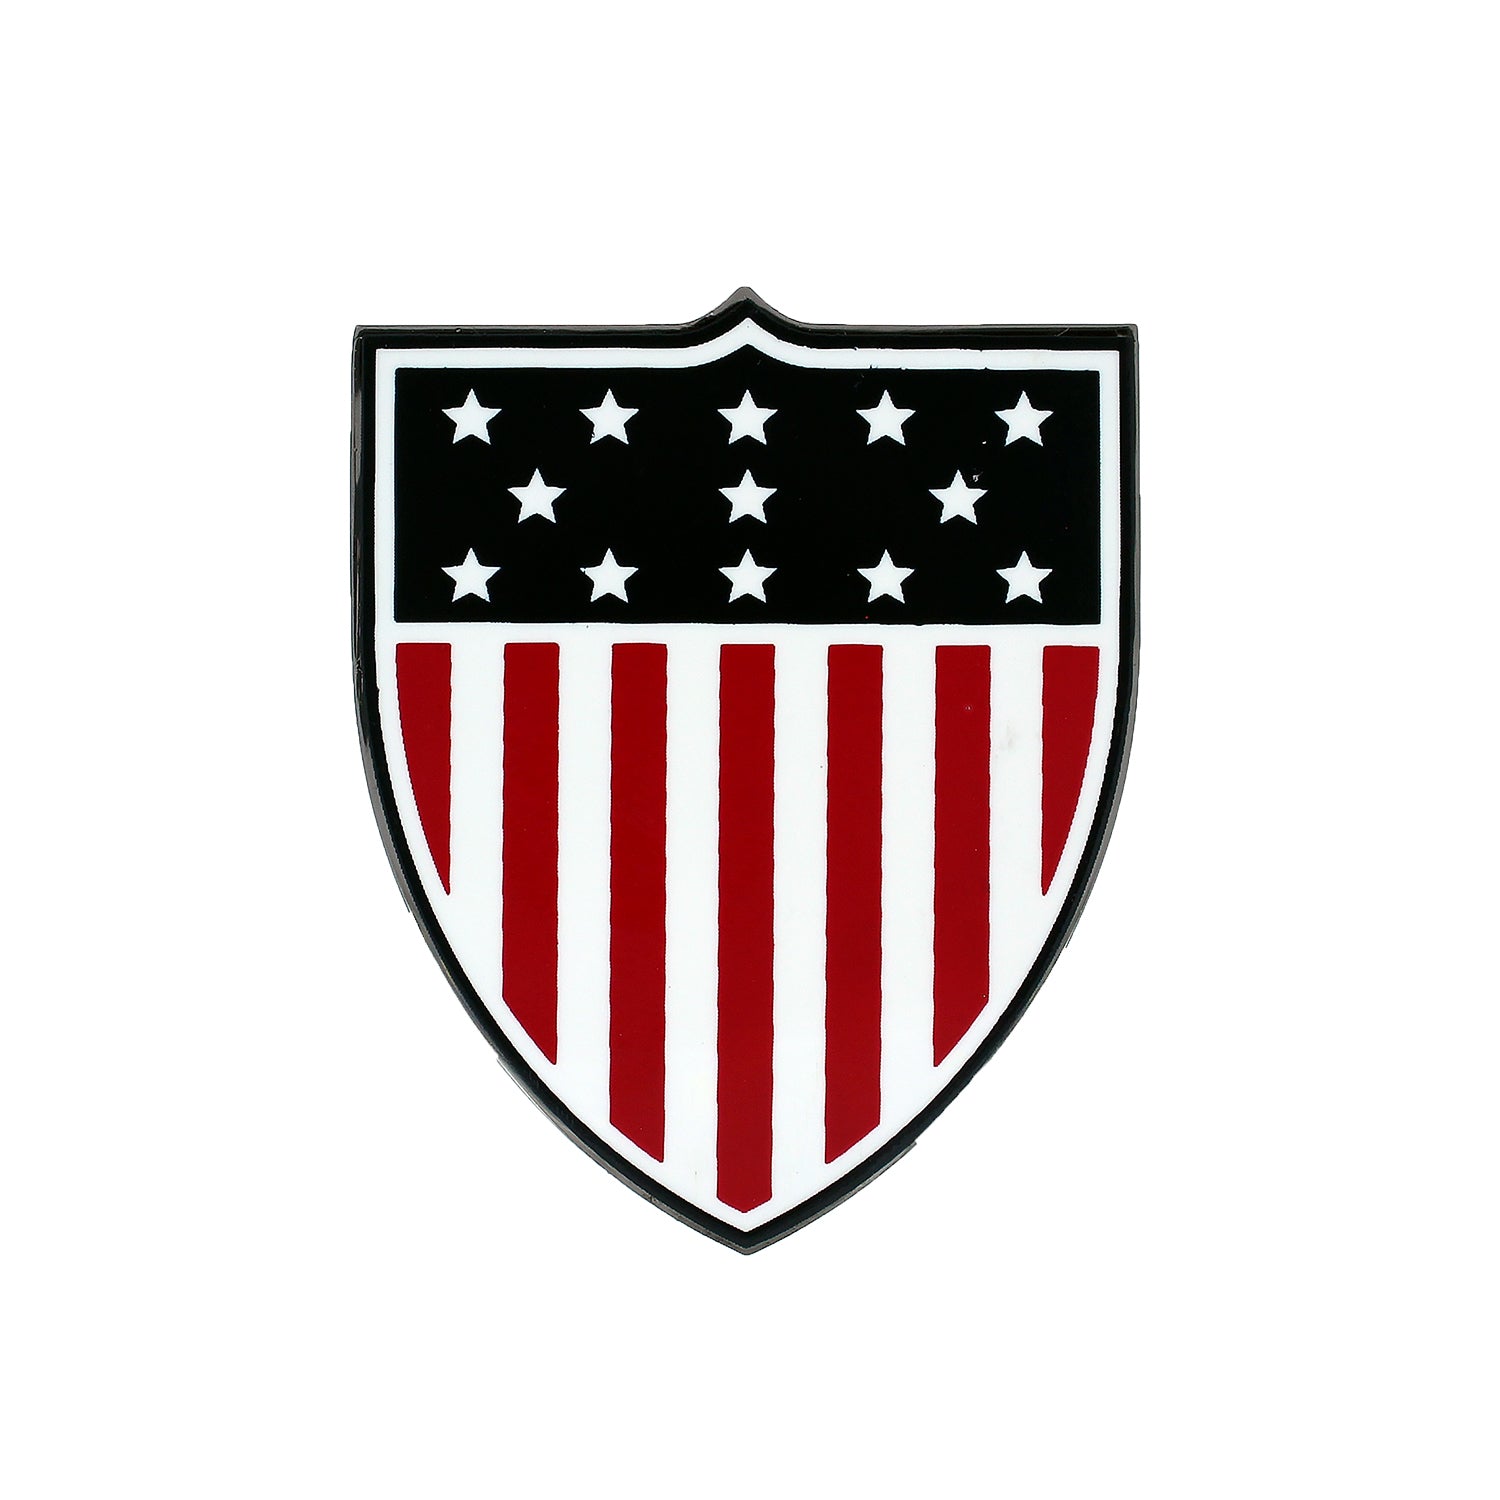 Team USA Shield Magnet